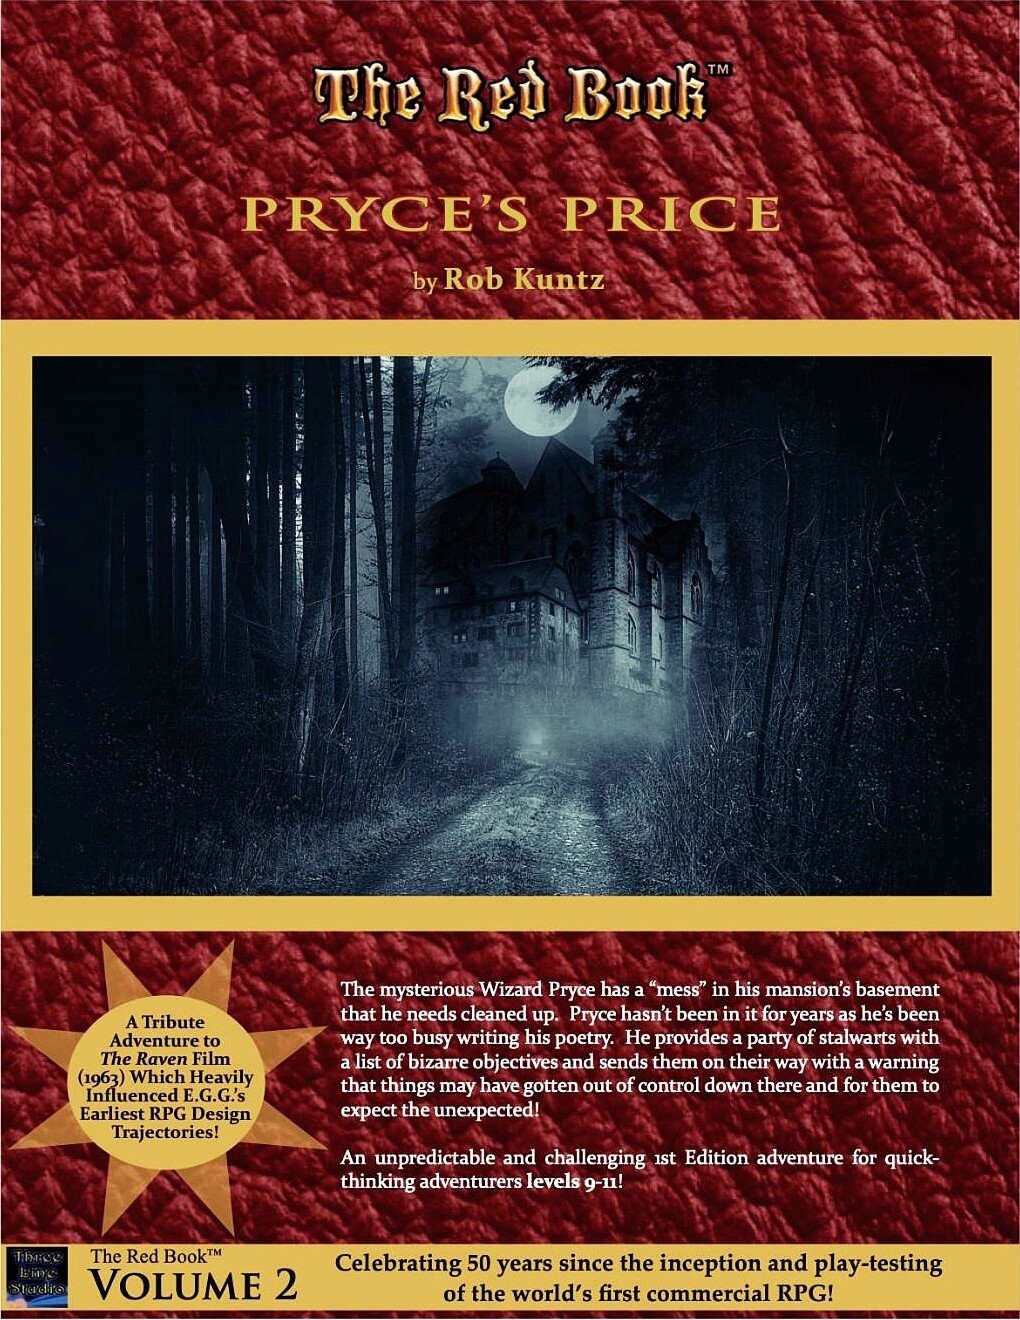 Rob Kuntz's newest adventure, Pryce's Price